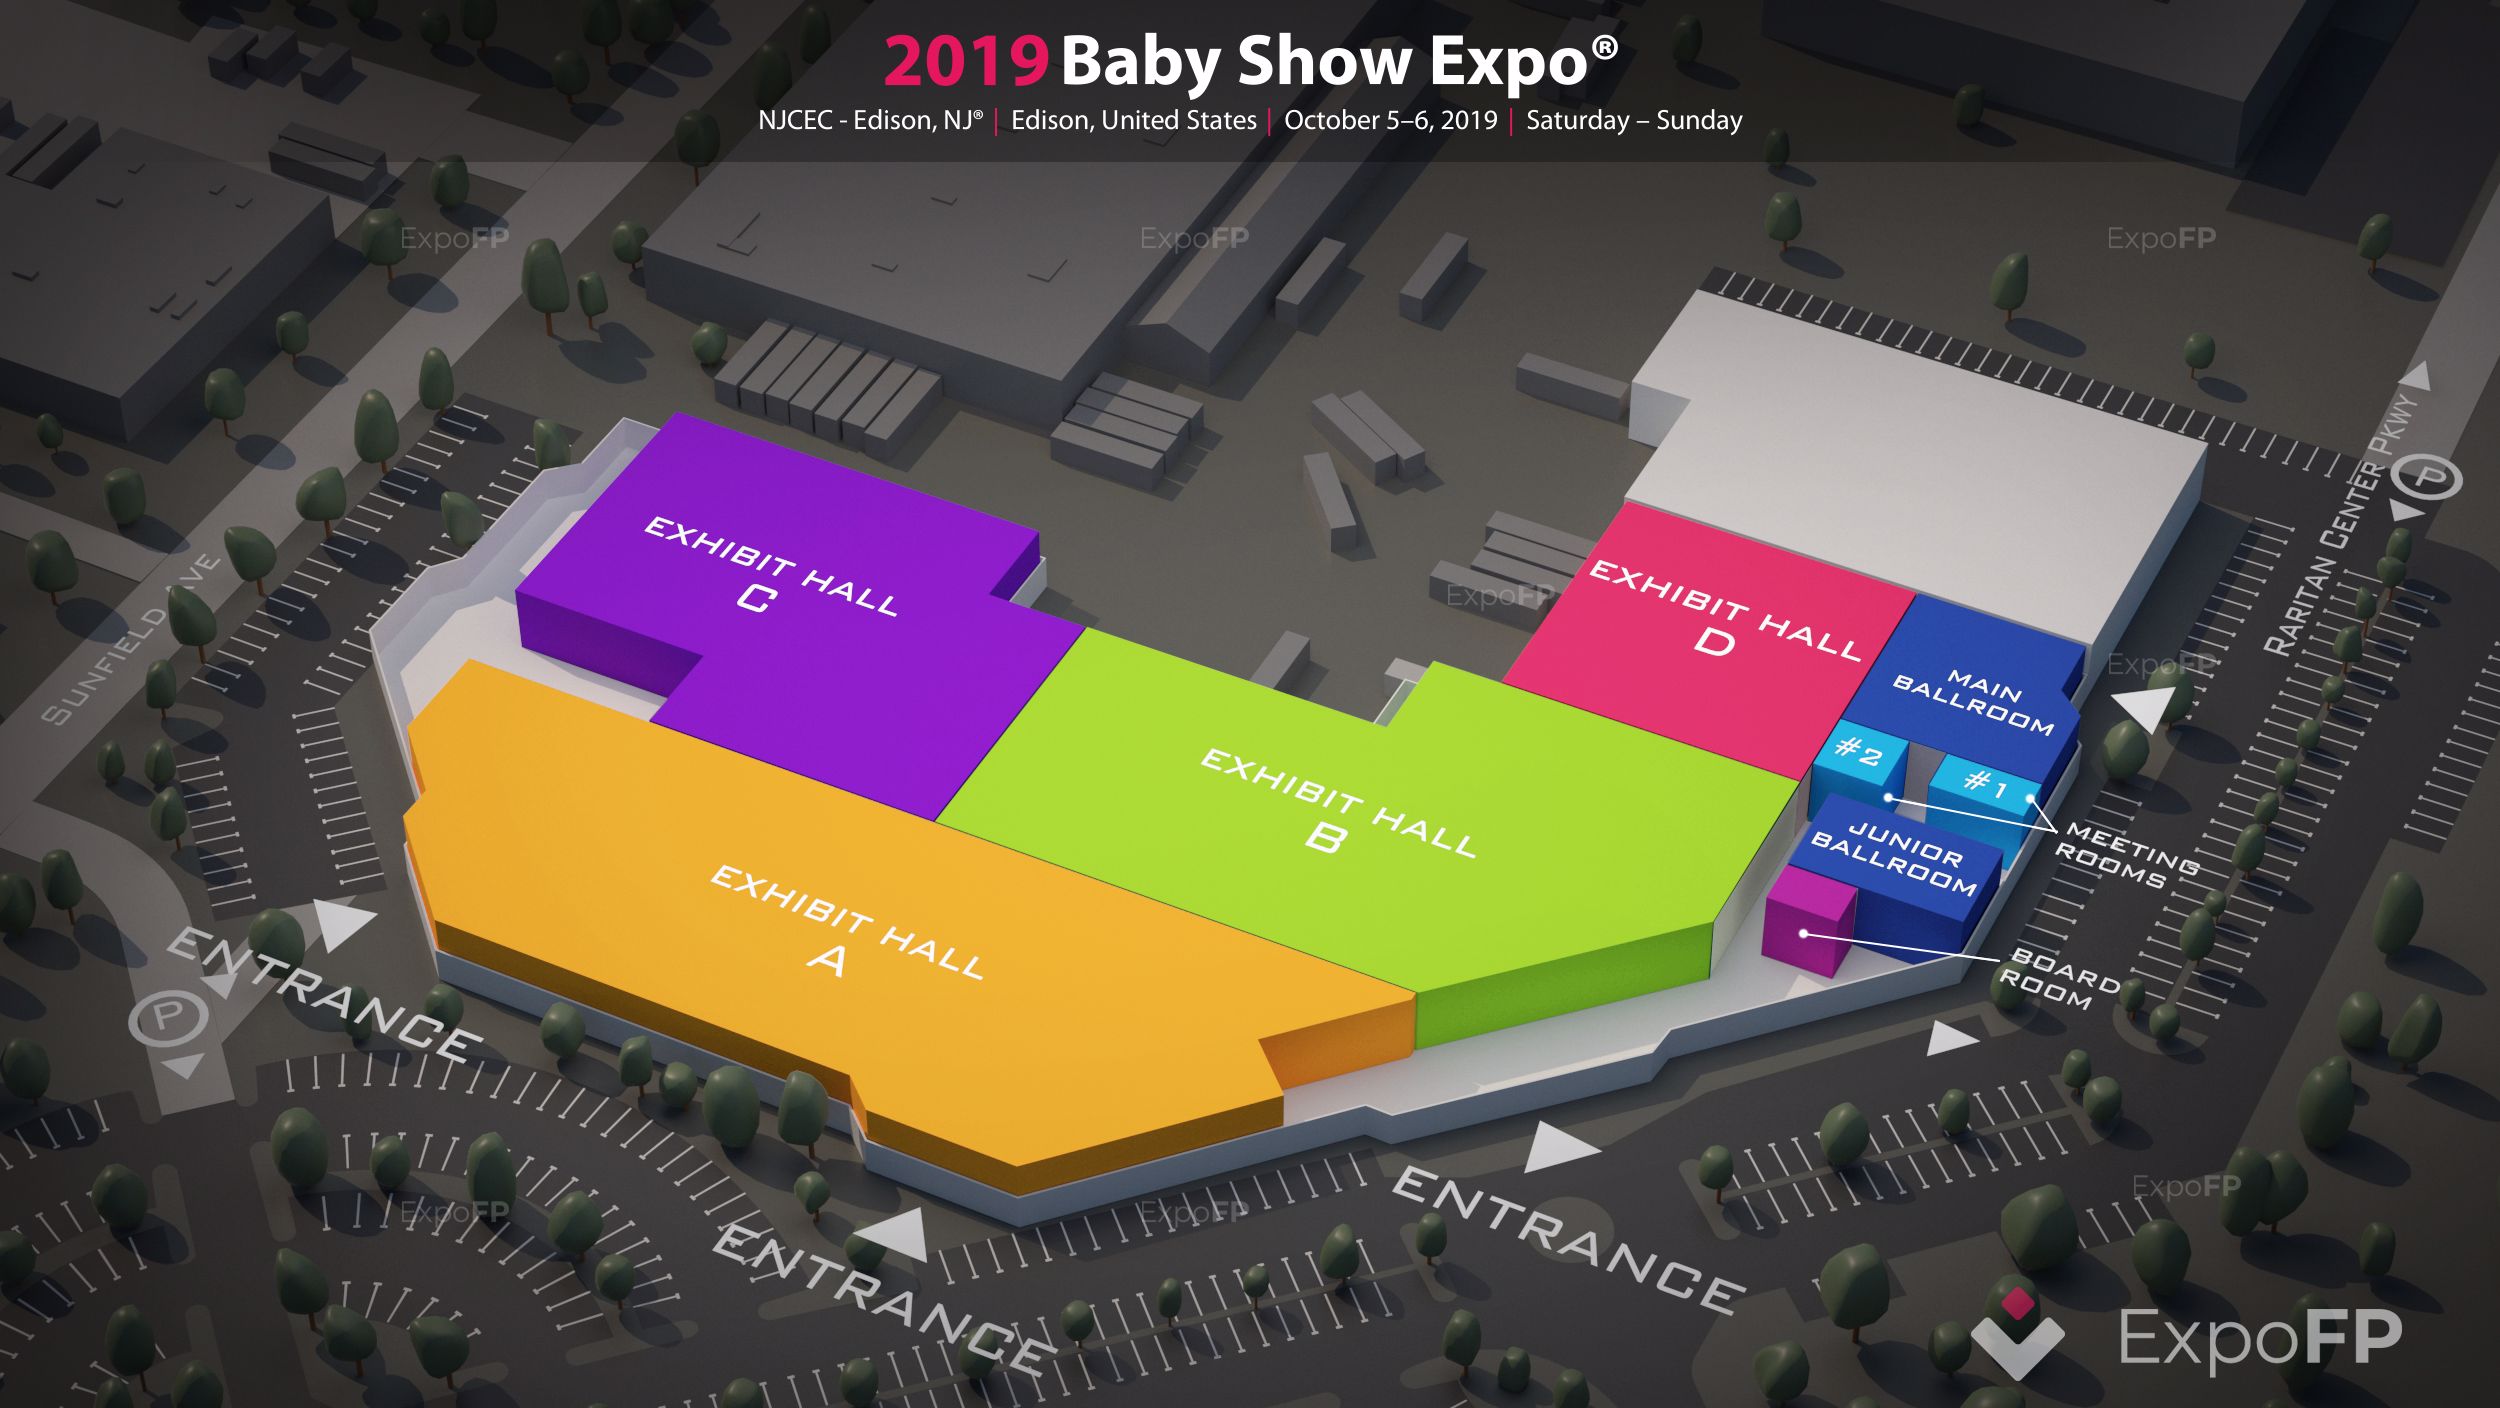 Baby Show Expo 2019 in NJCEC - Edison, NJ